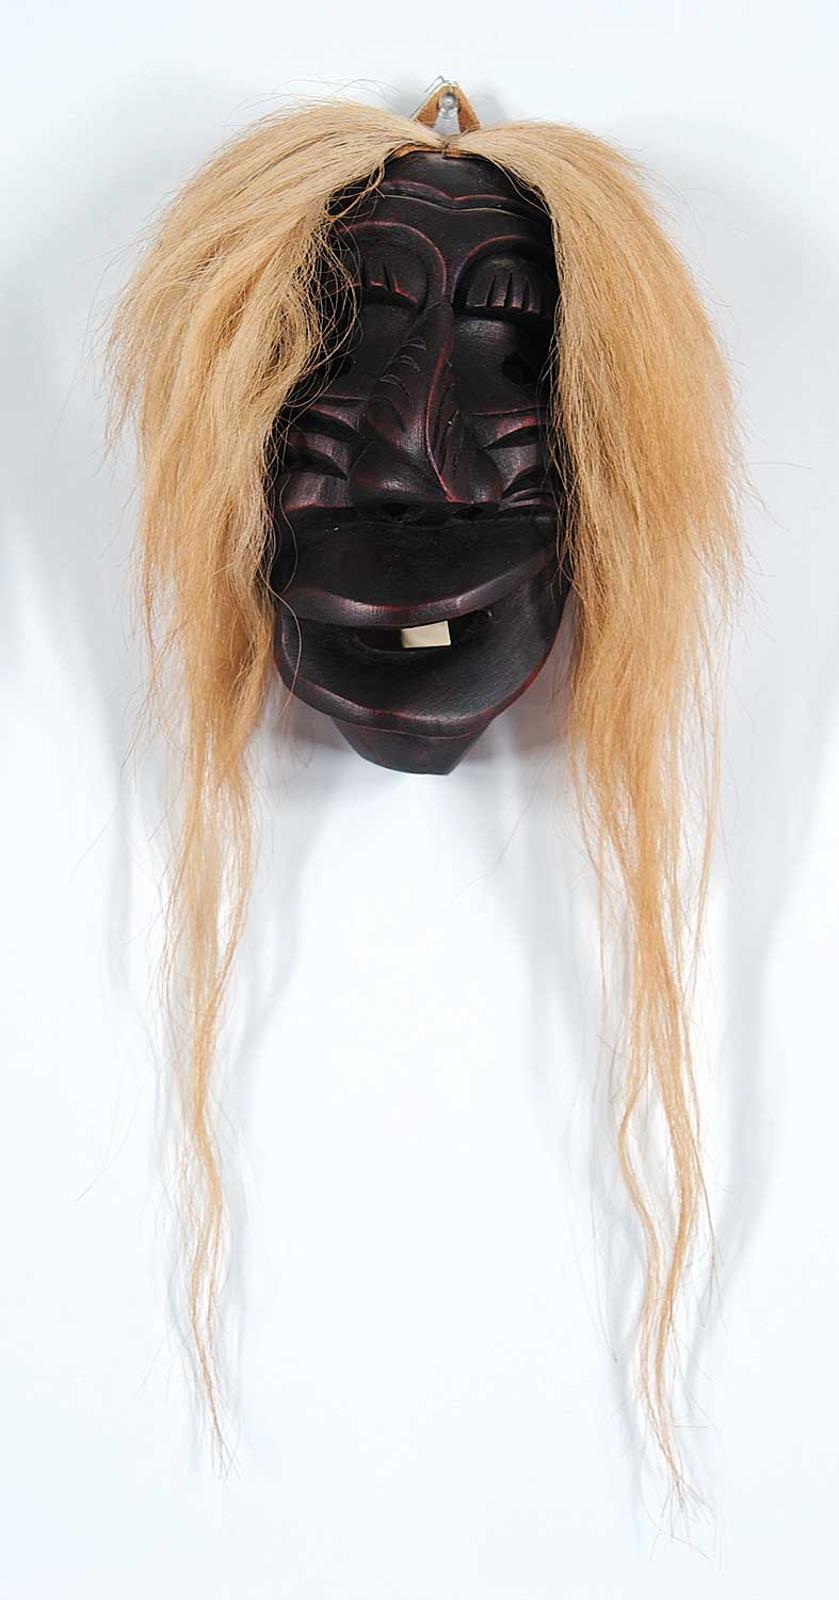 Dohan'dre Iroquois - Broken Nose Mask